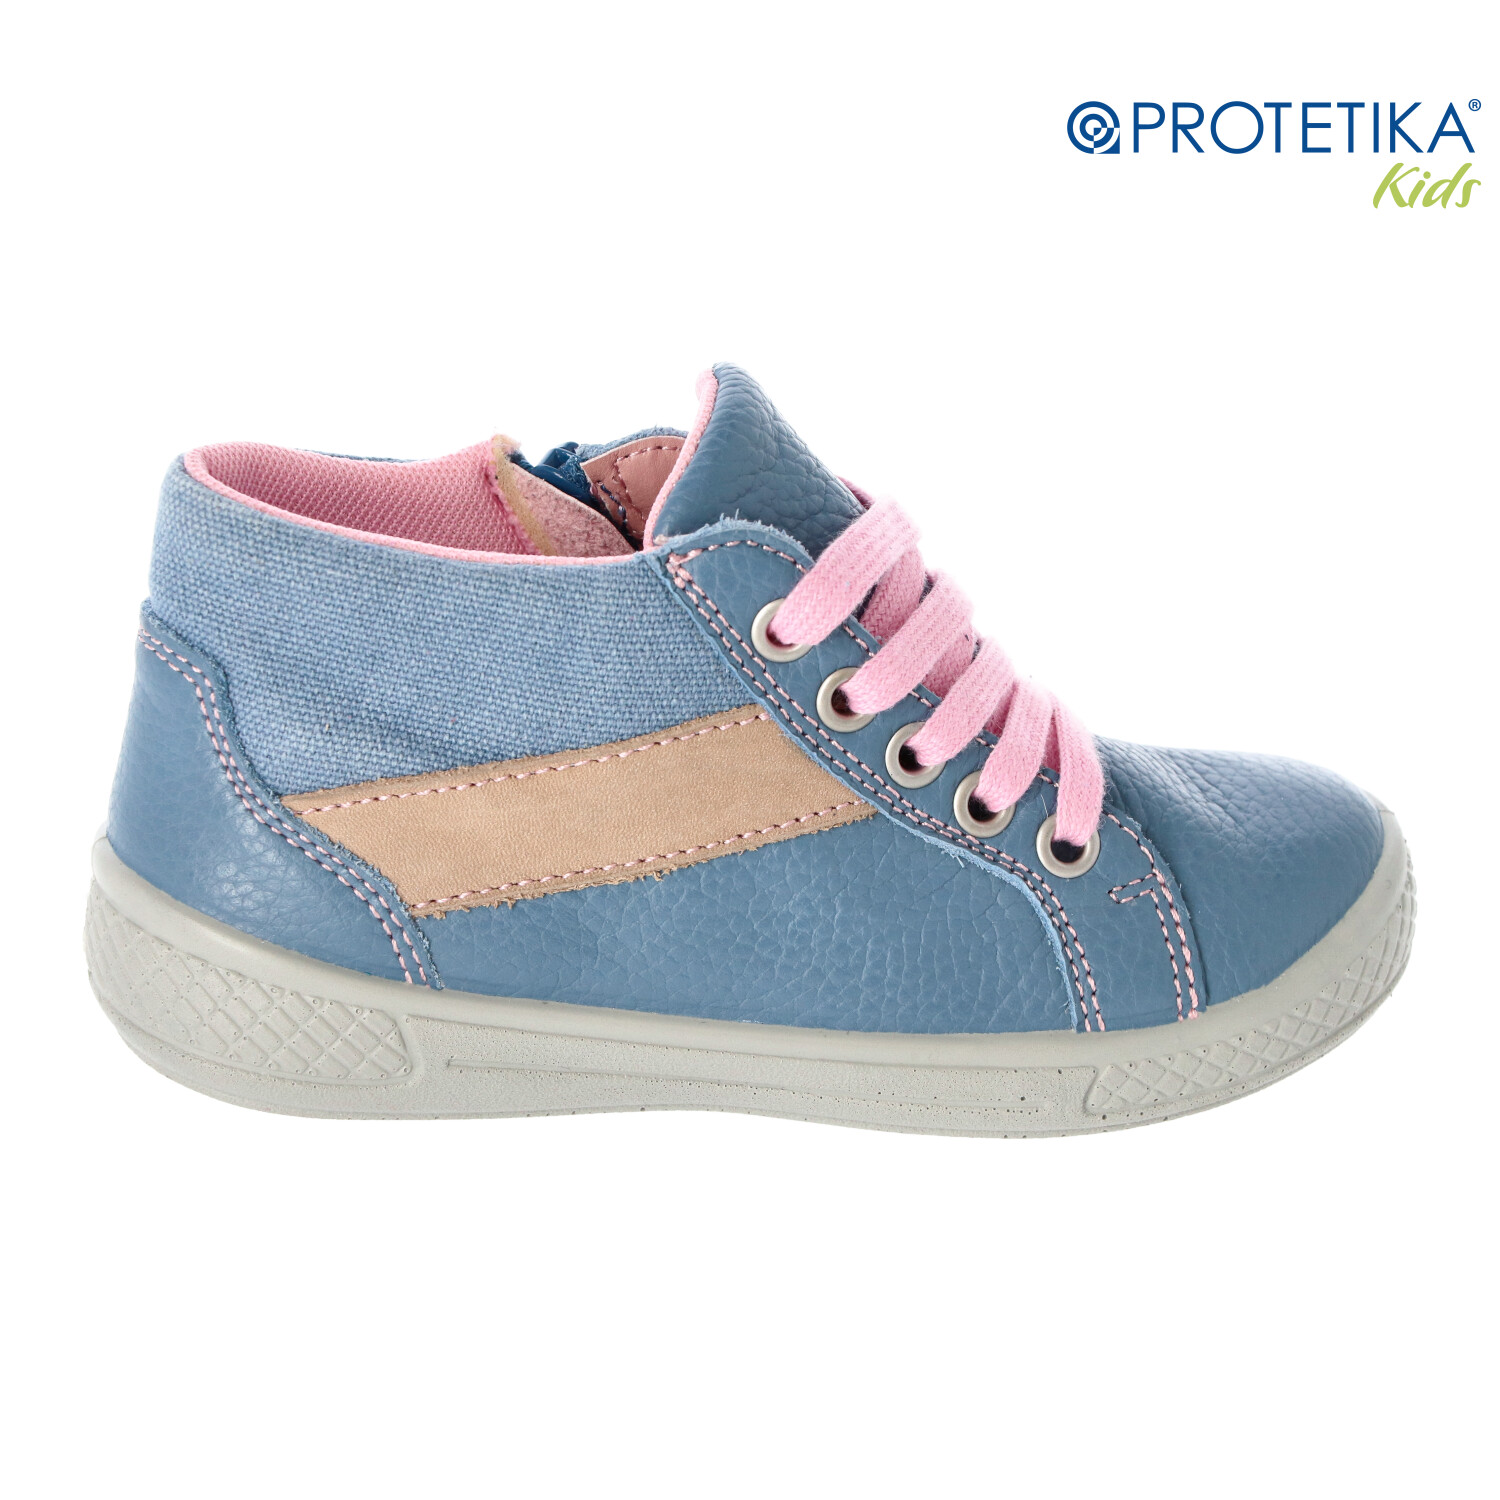 Protetika - topánky s membránou PRO-tex SISI blue